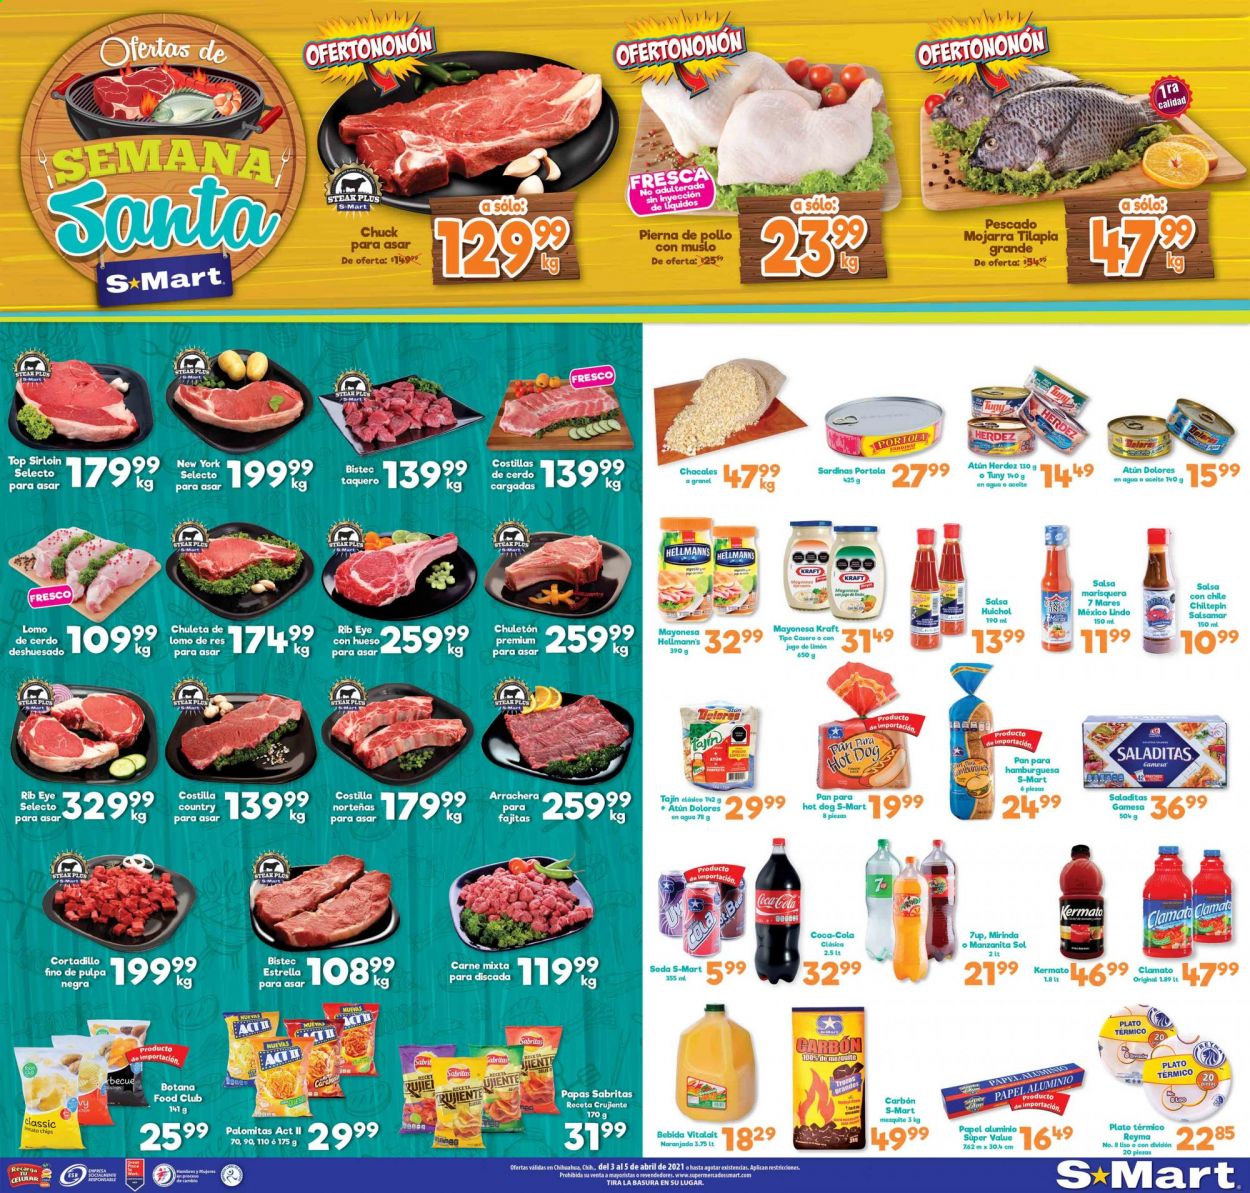 thumbnail - Folleto actual S-Mart - 3.4.2021 - 5.4.2021 - Ventas - chuleta, lomo, lomo de cerdo, steak, costilla, chuletón, papa, pan, tilapia, sardinas, pescado, hot dog, mayonesa, Hellmann's, chips, puré de tomate, salsa, bebida, Coca-cola, clamato, jugo de limón, Mirinda, 7UP. Página 1.